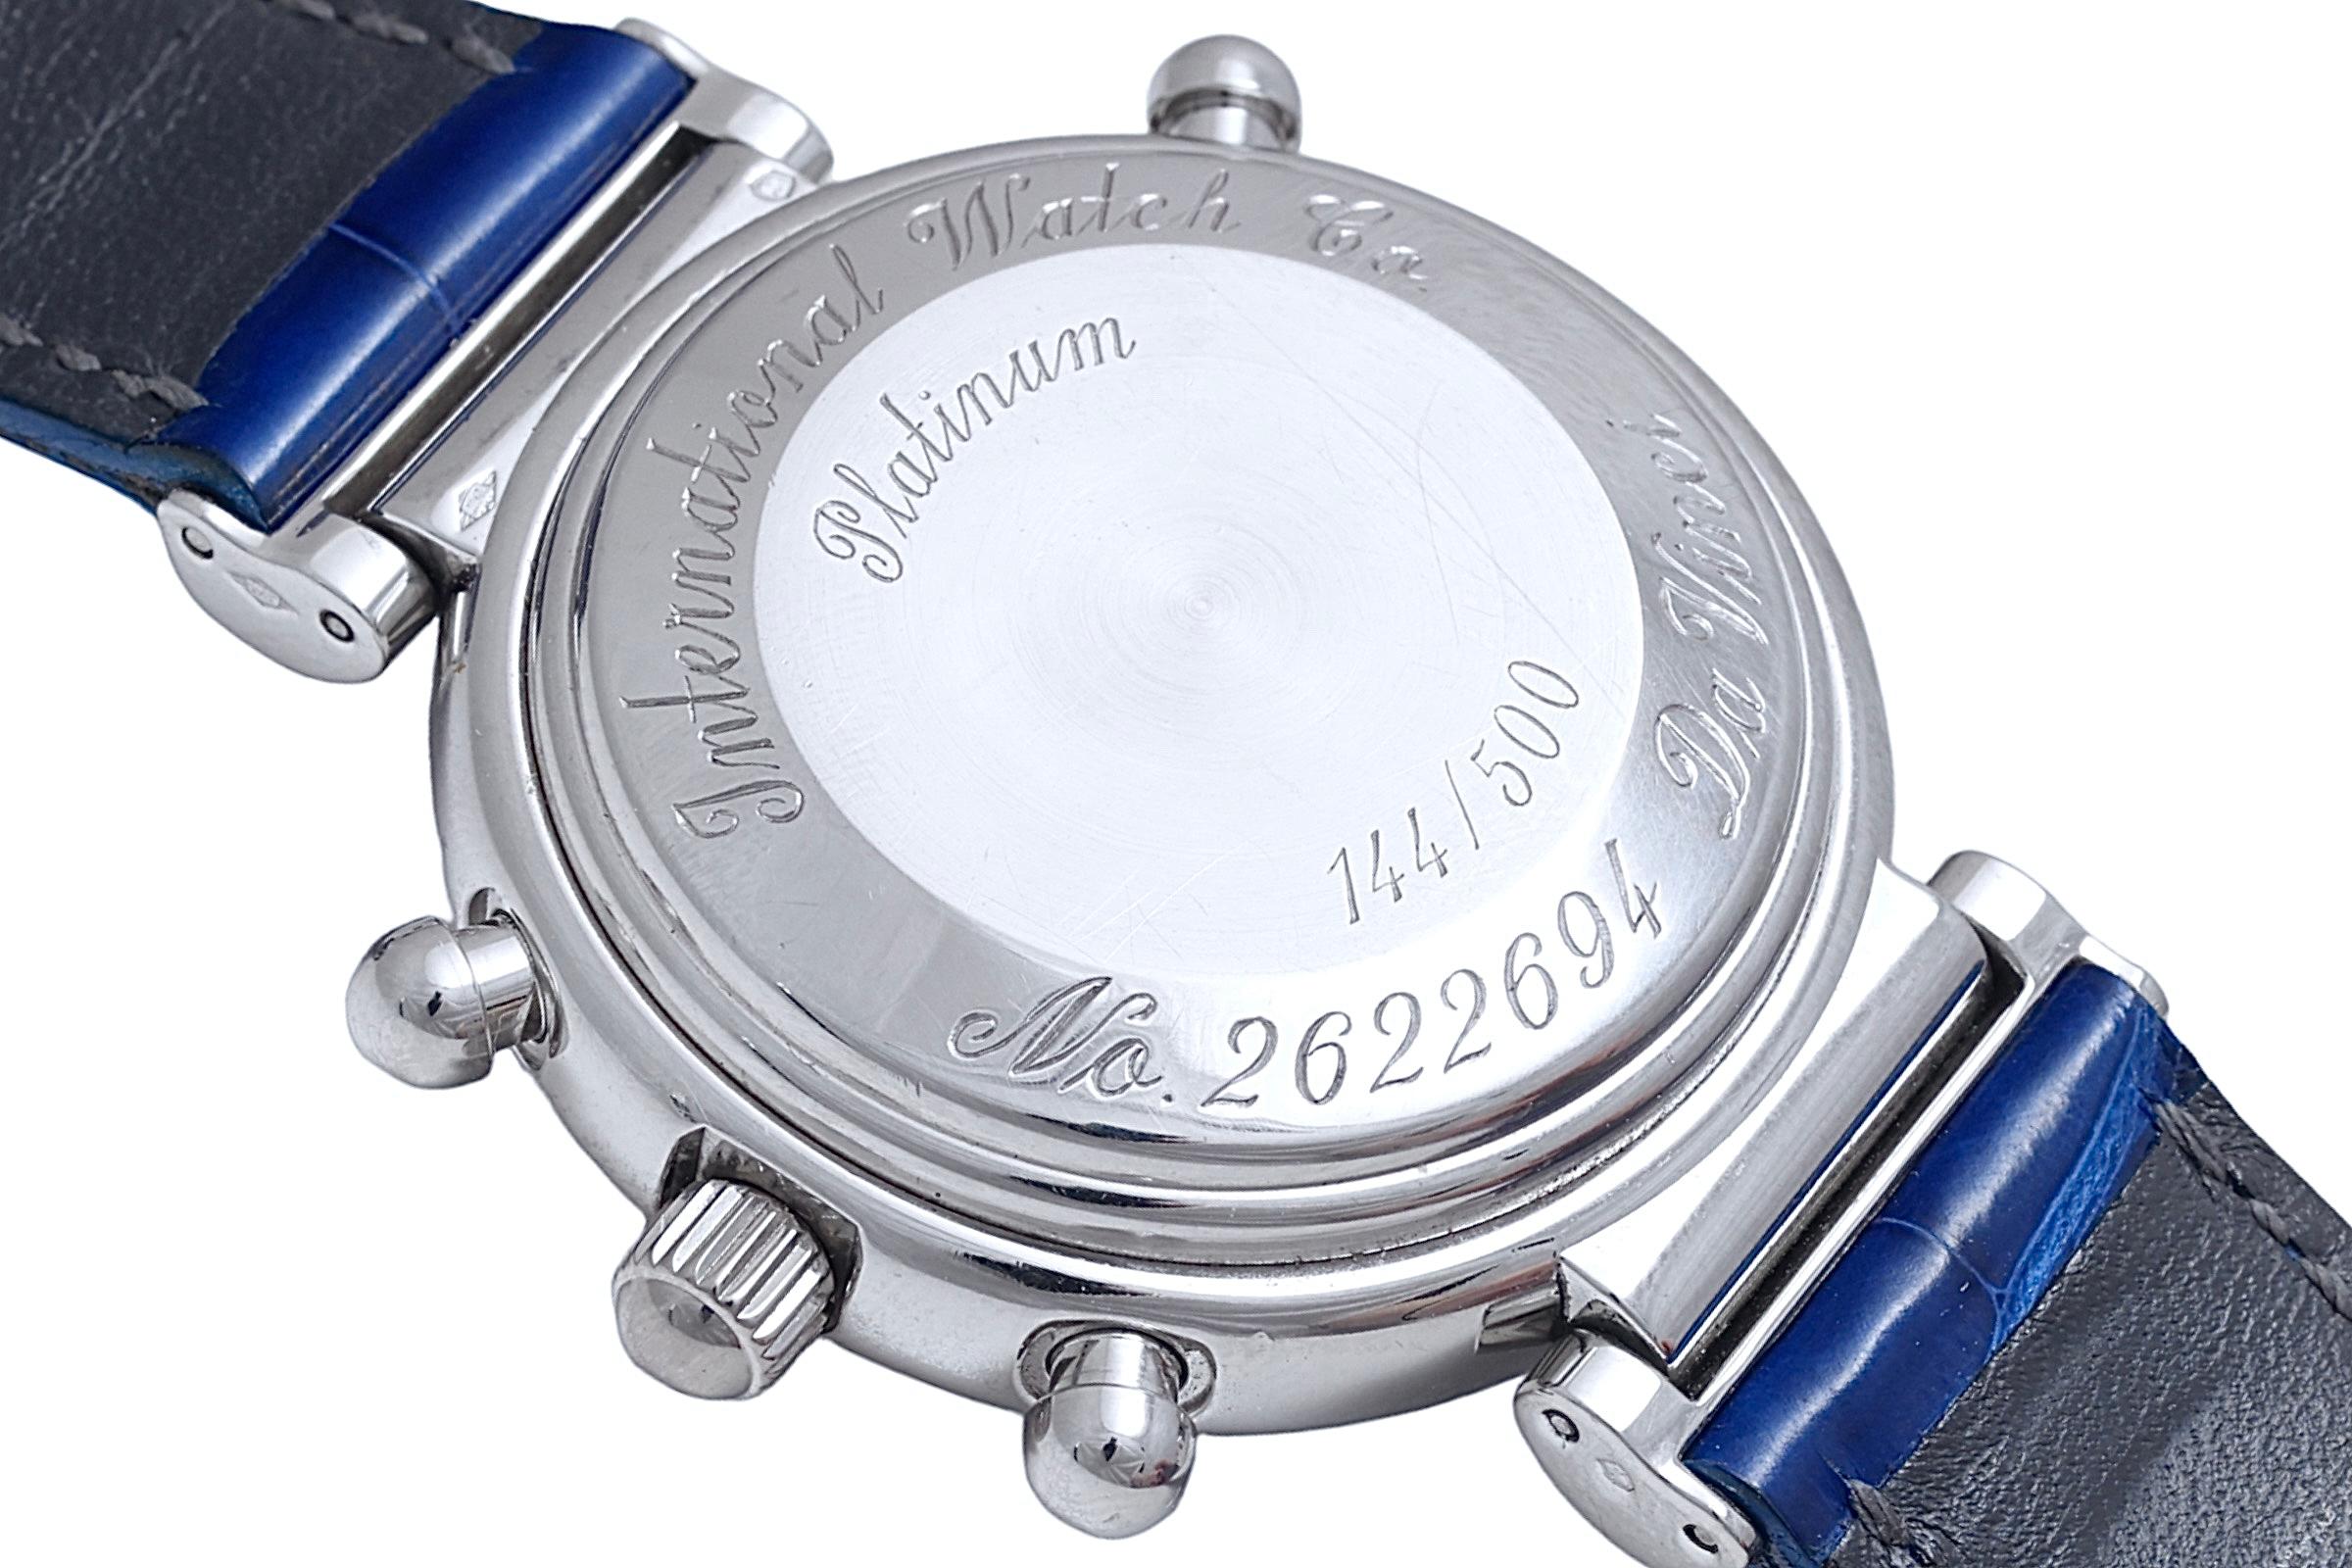 Platinum IWC Perpetual Calendar Split Second Chronograph Limited Wrist Watch3751 For Sale 5